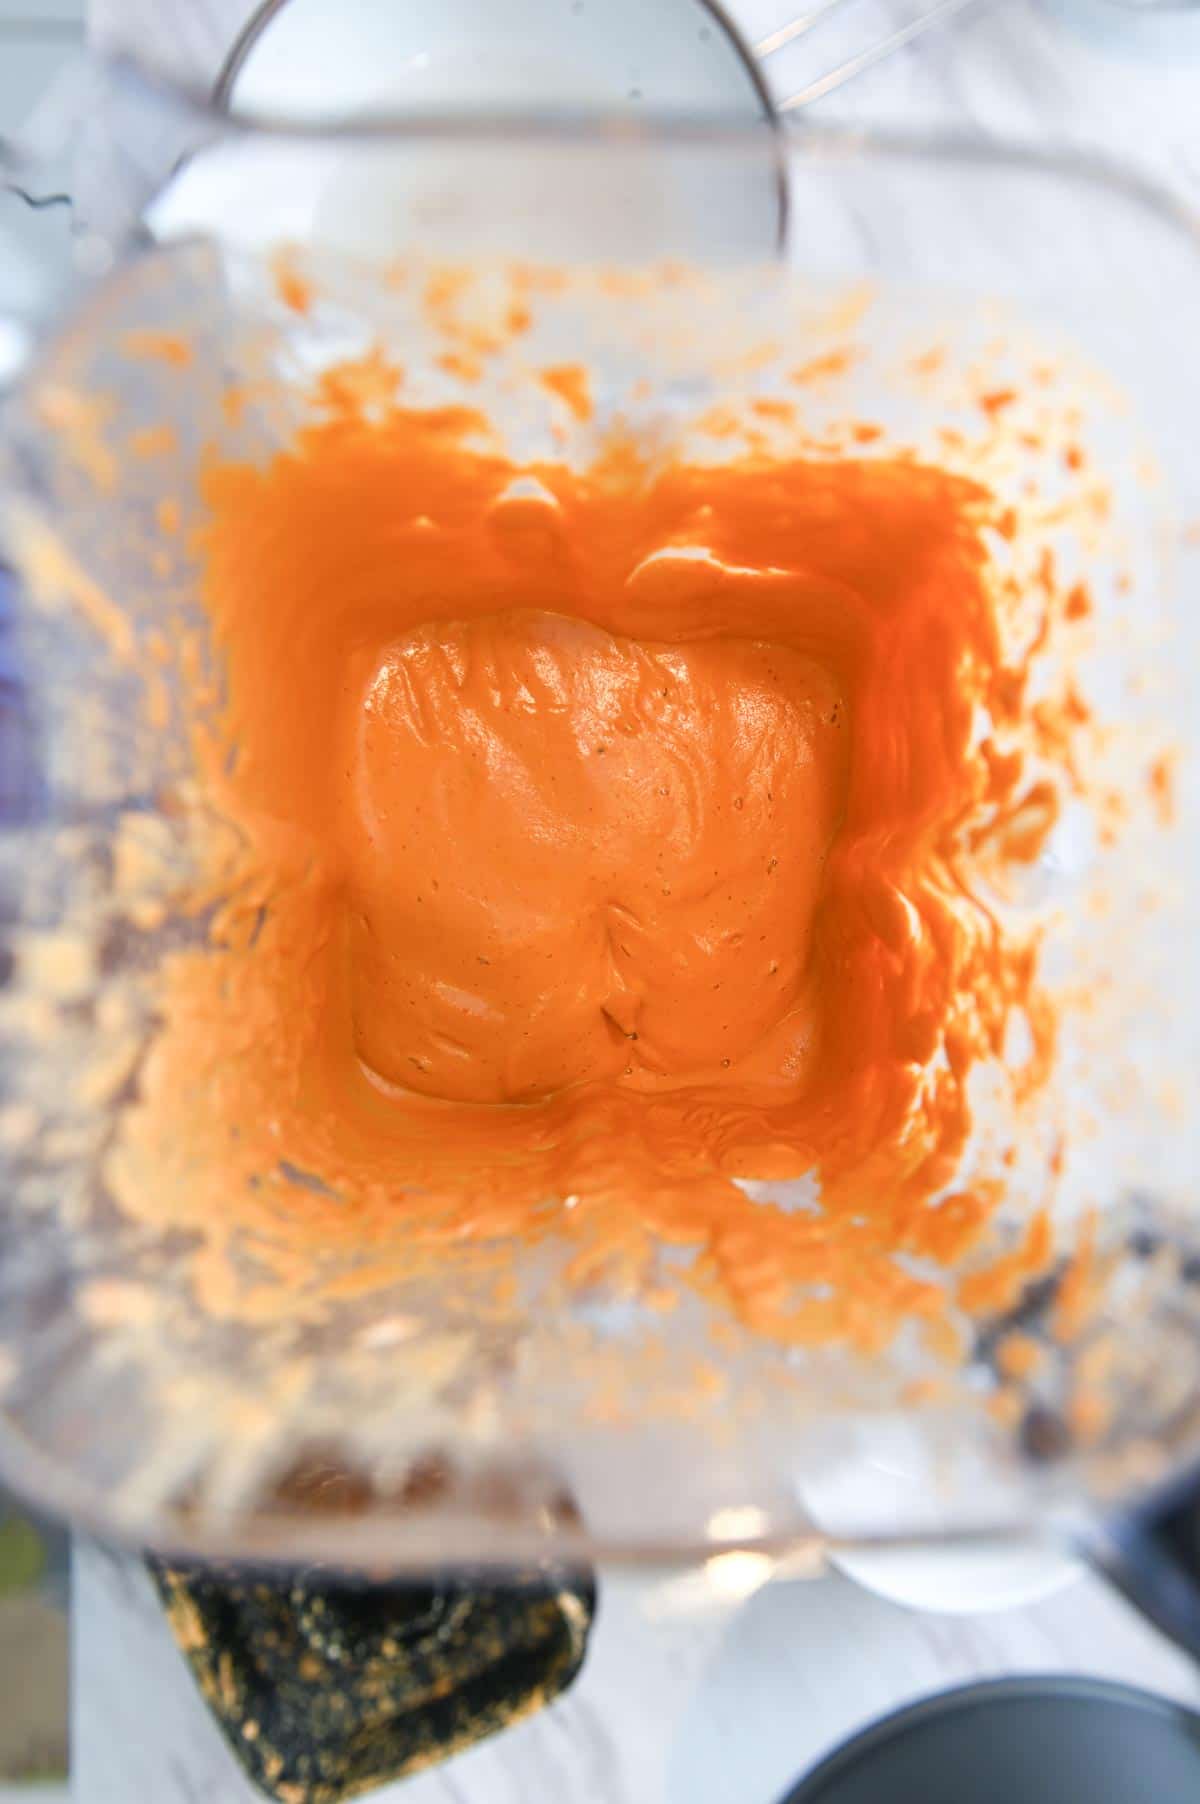 Orange cashew cream in a blender.